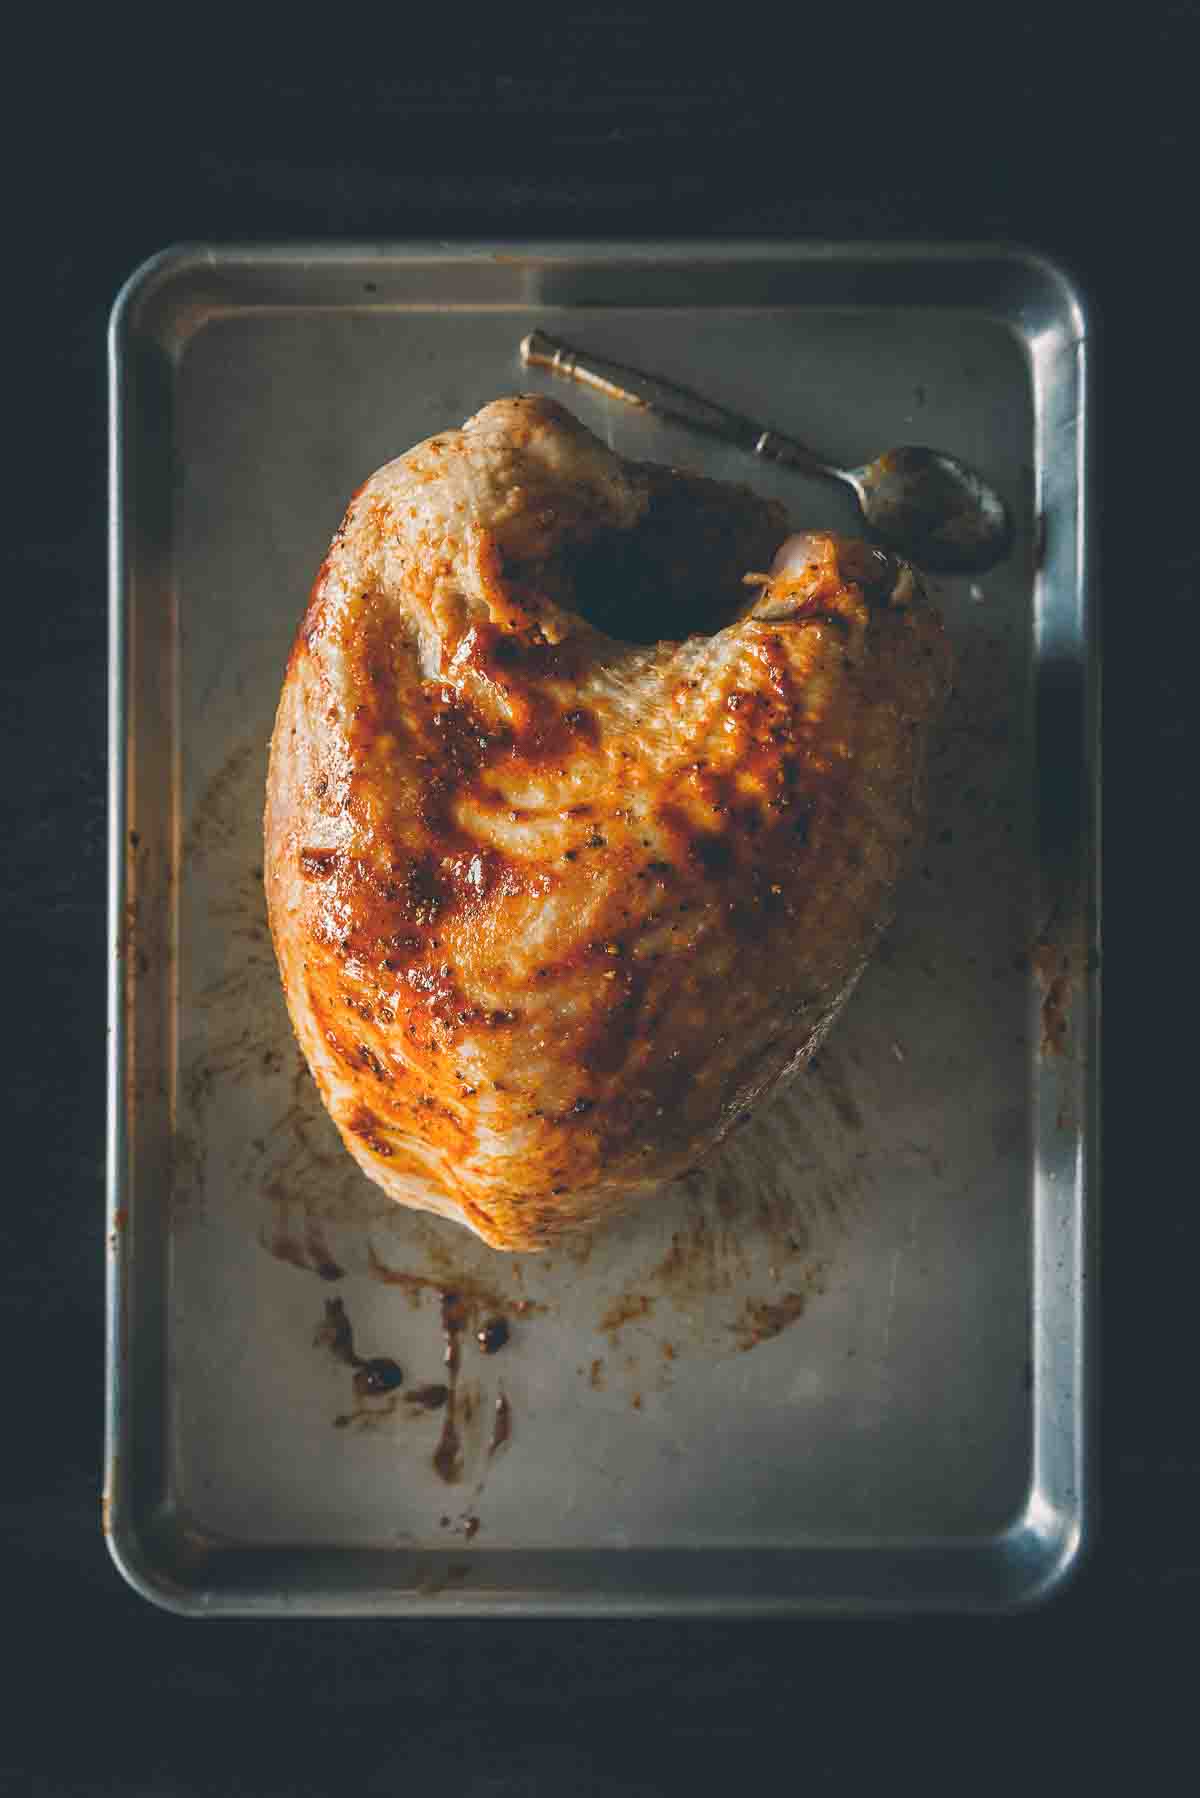 Turkey breast rubbed with glaze. 